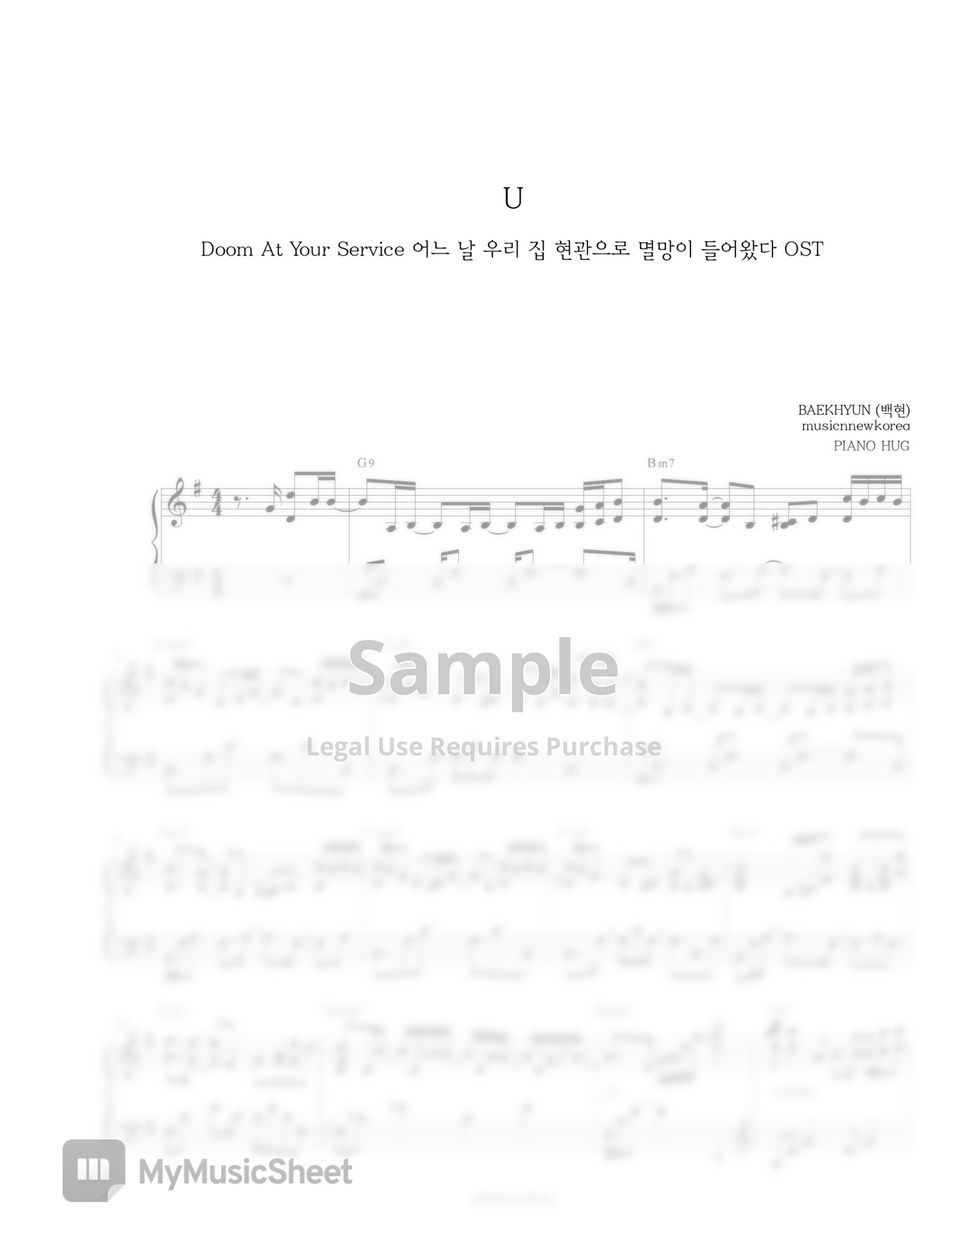 BAEKHYUN - U (Doom At Your Service OST) by Piano Hug